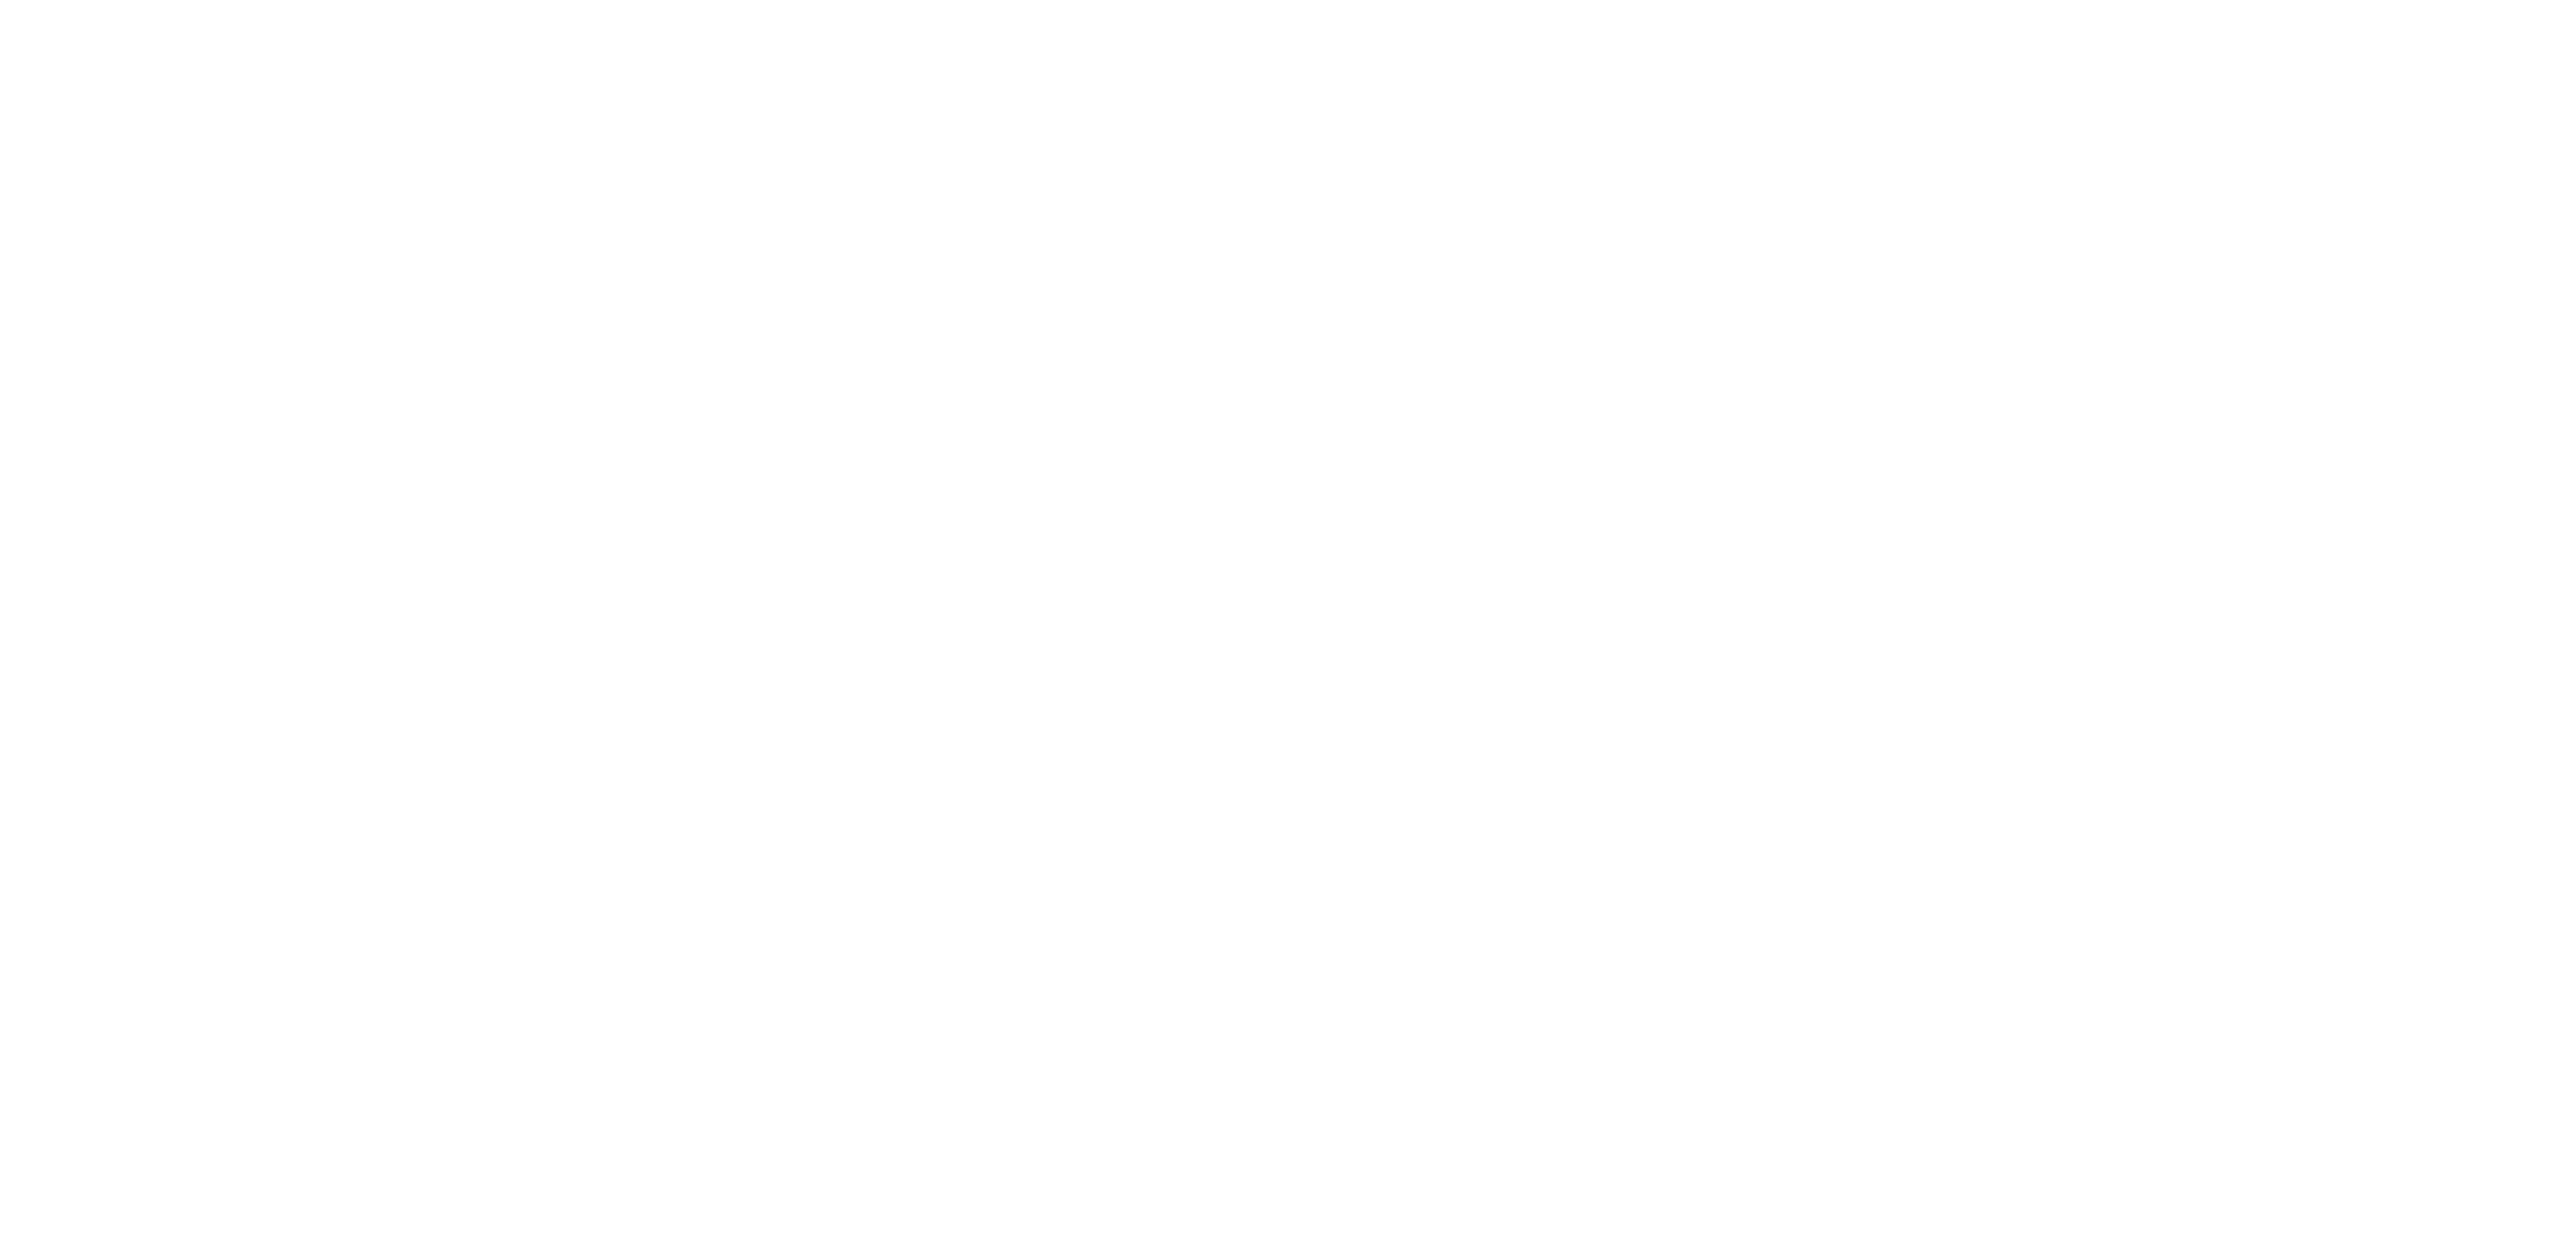 Random Acts of Green